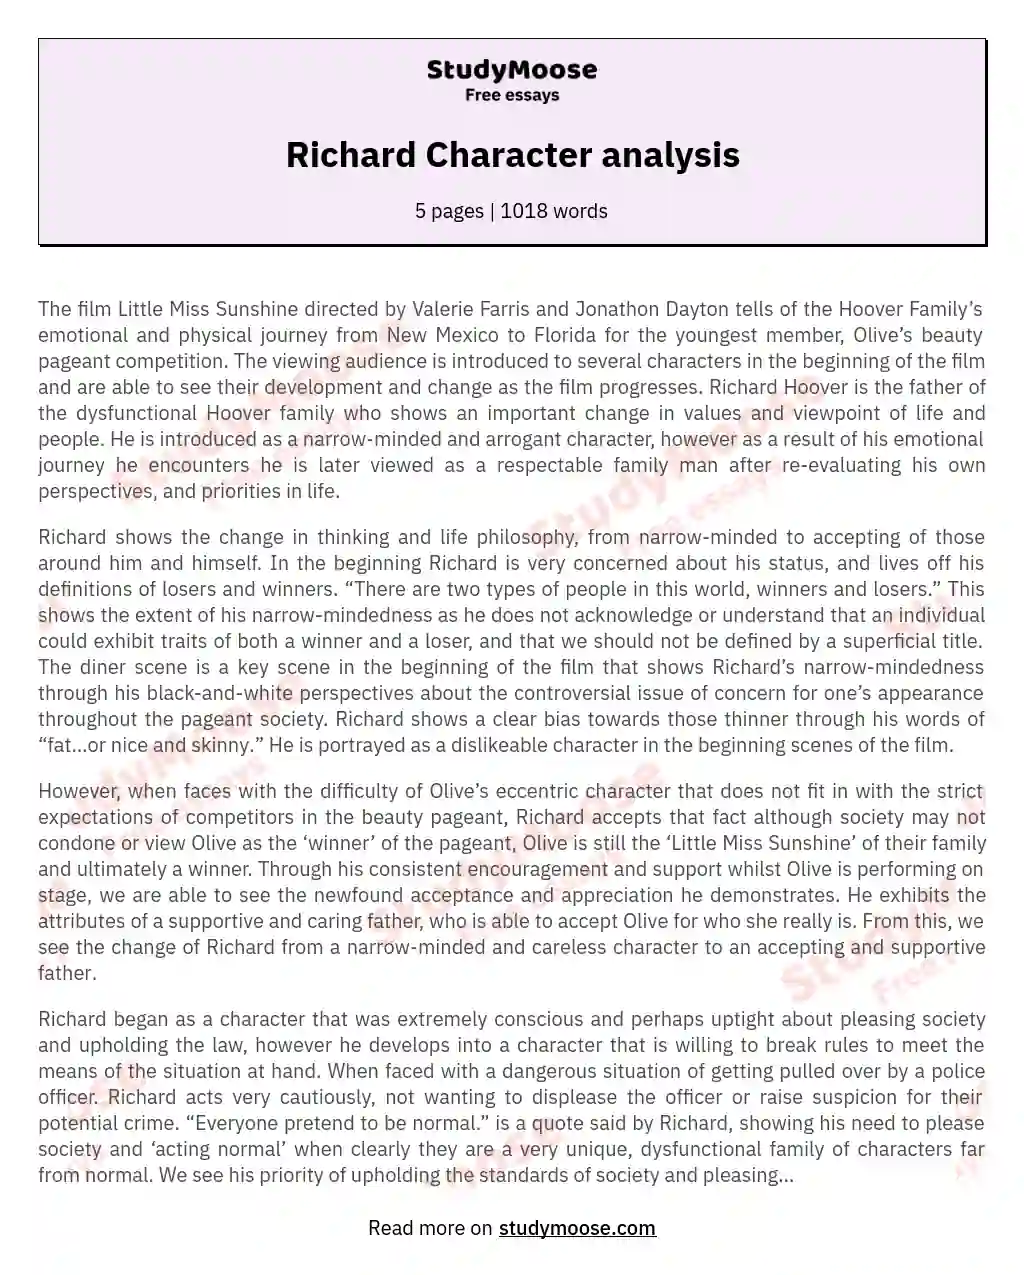 Richard Character analysis essay